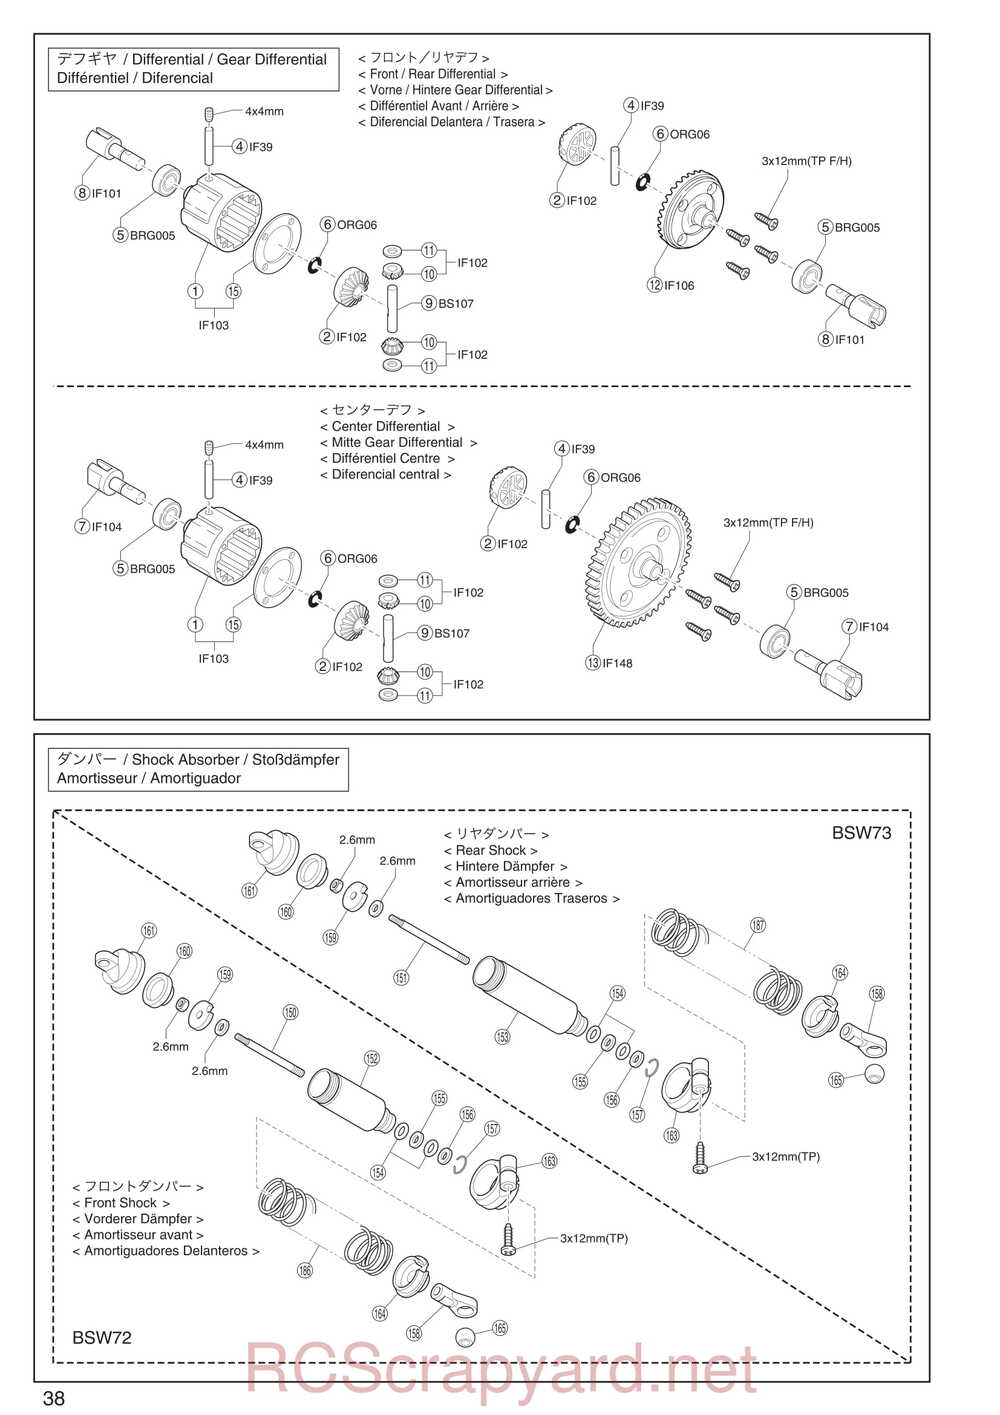 Kyosho - 31278 - Inferno-MP-7-5-Sports-3 - Manual - Page 06